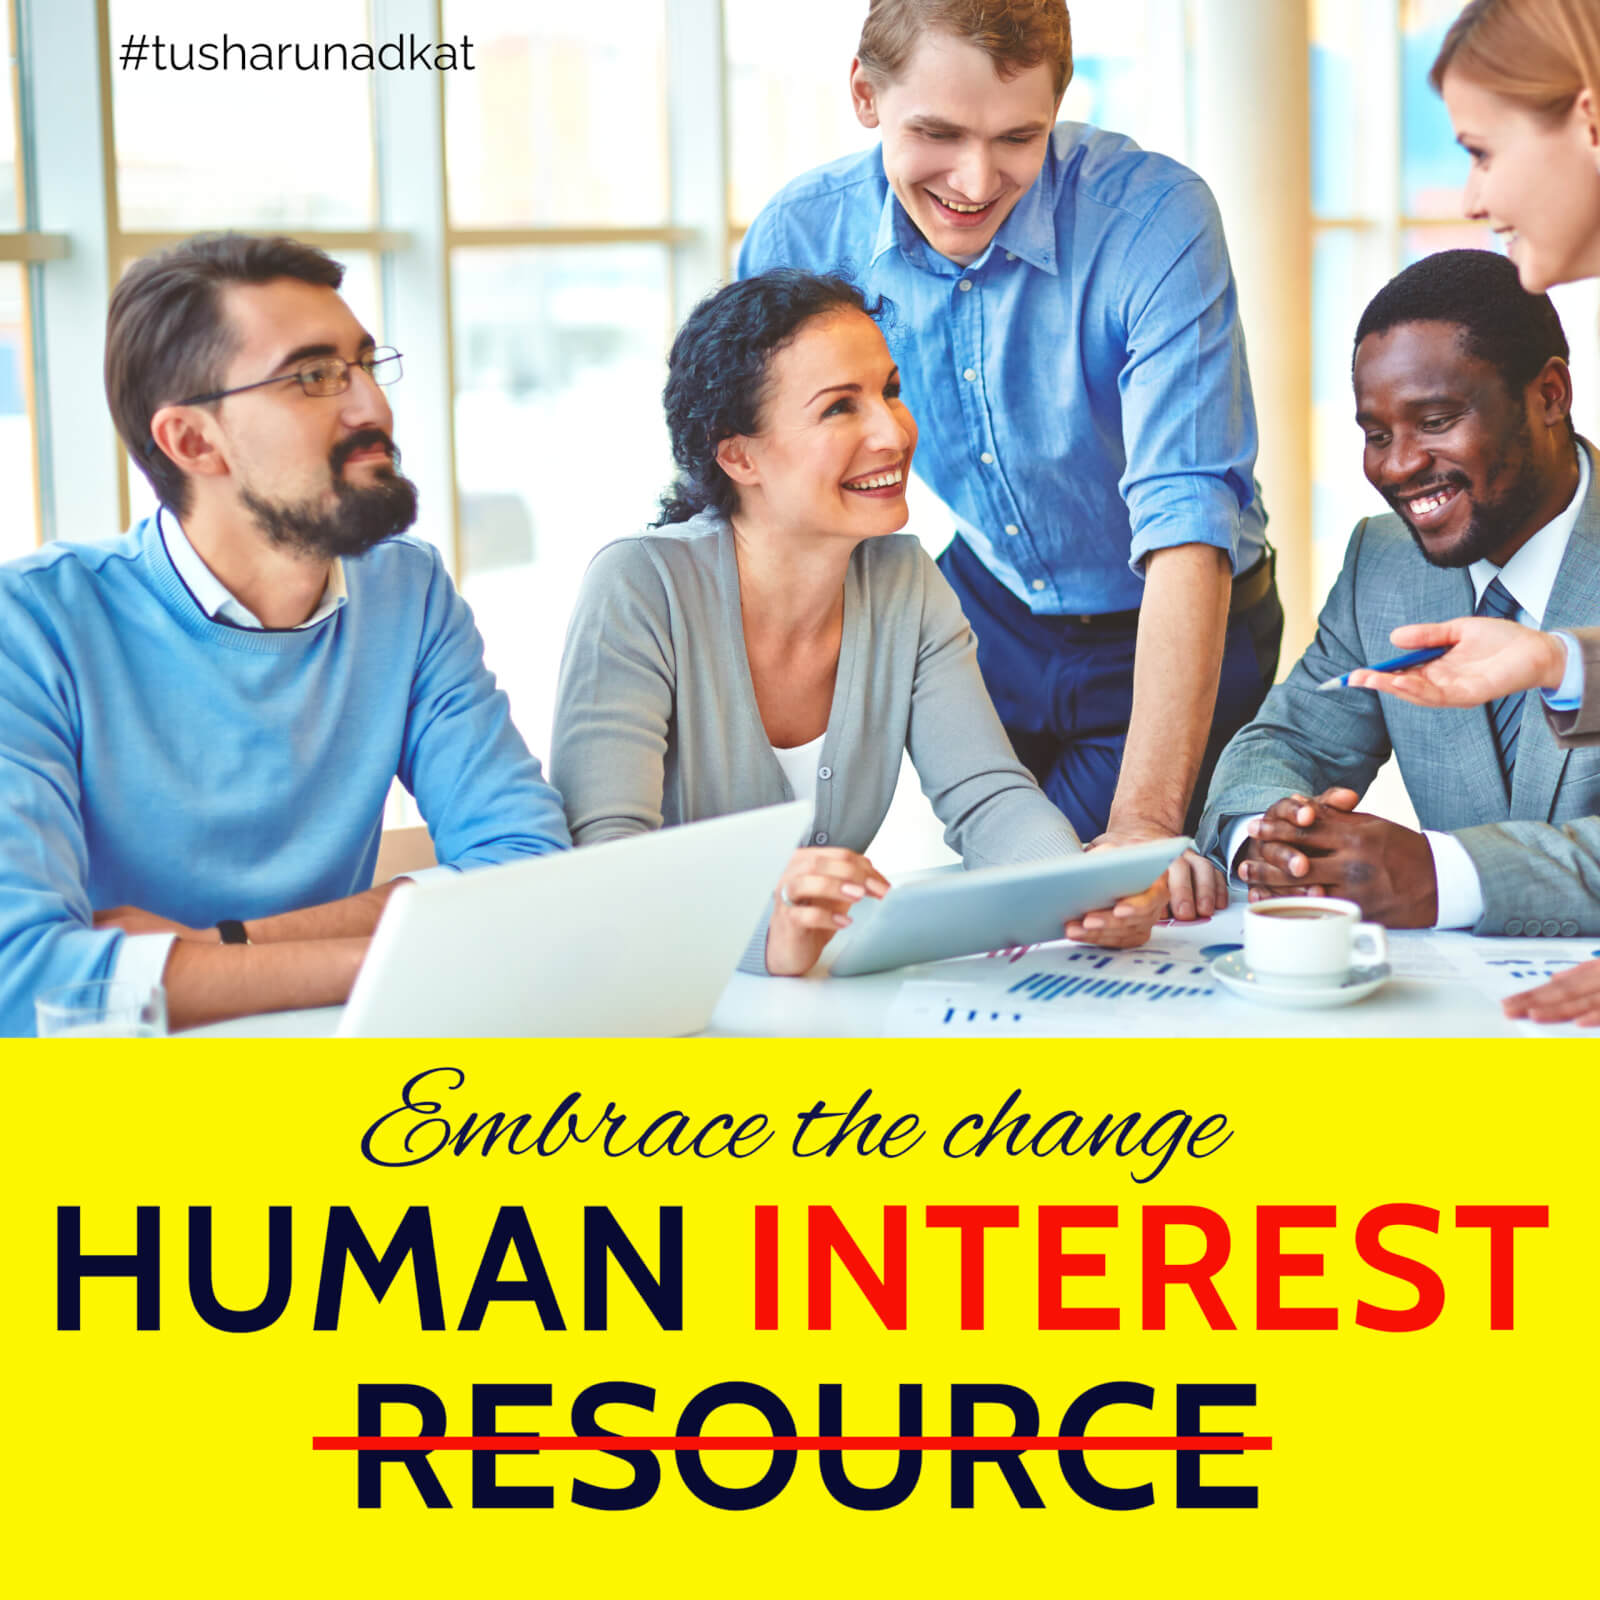 10 Ways The "Human Interest" Approach Helps Battle Corporate Politics & Biases